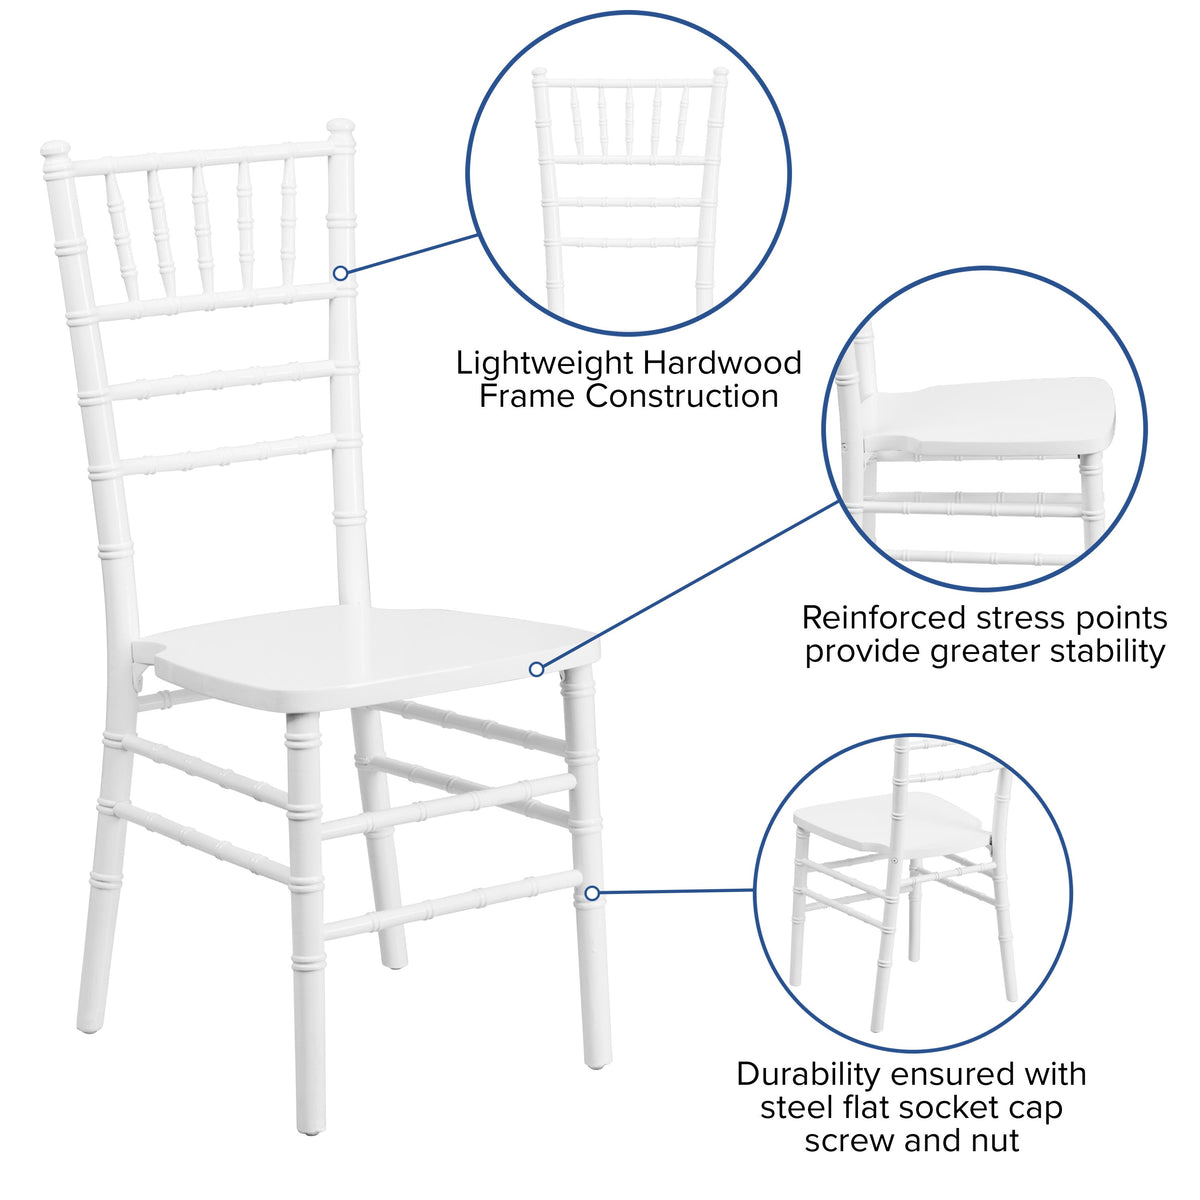 White |#| 1100lb. Capacity White Wood Stackable Chiavari Event Chair